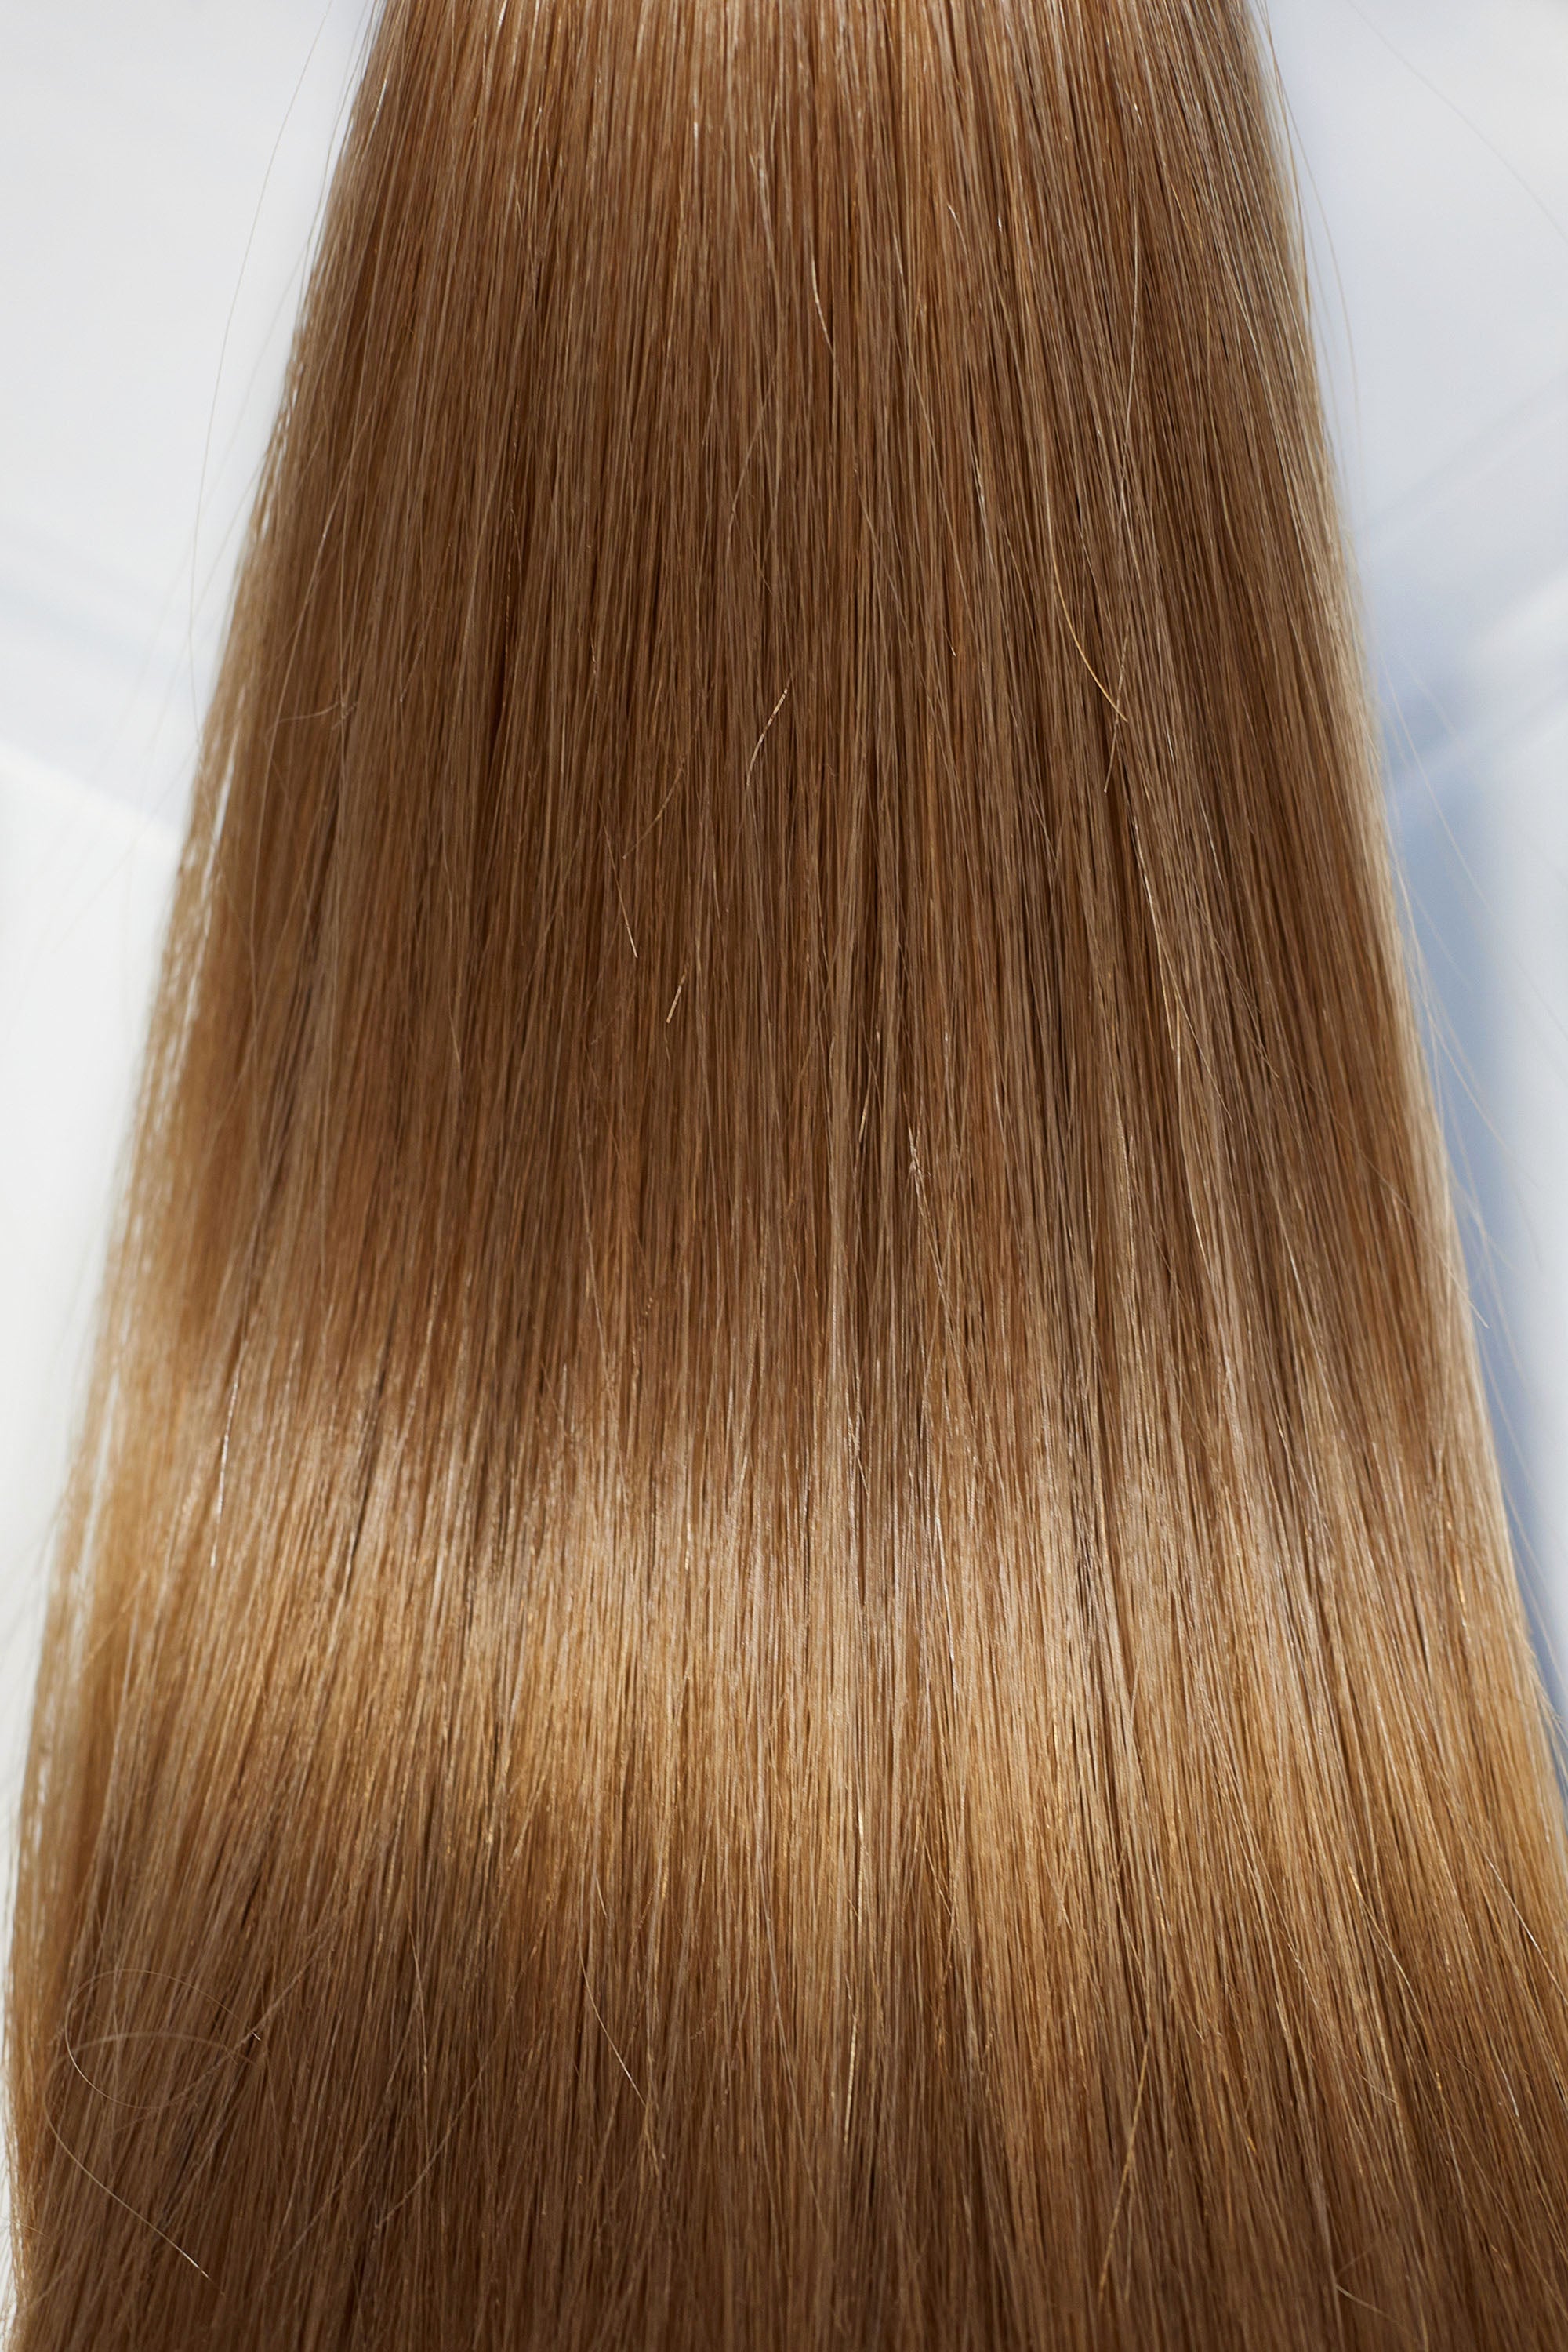 Behair professional Keratin Tip "Premium" 28" (70cm) Natural Straight Caramel Brown #8 - 25g (Micro - 0.5g each pcs) hair extensions